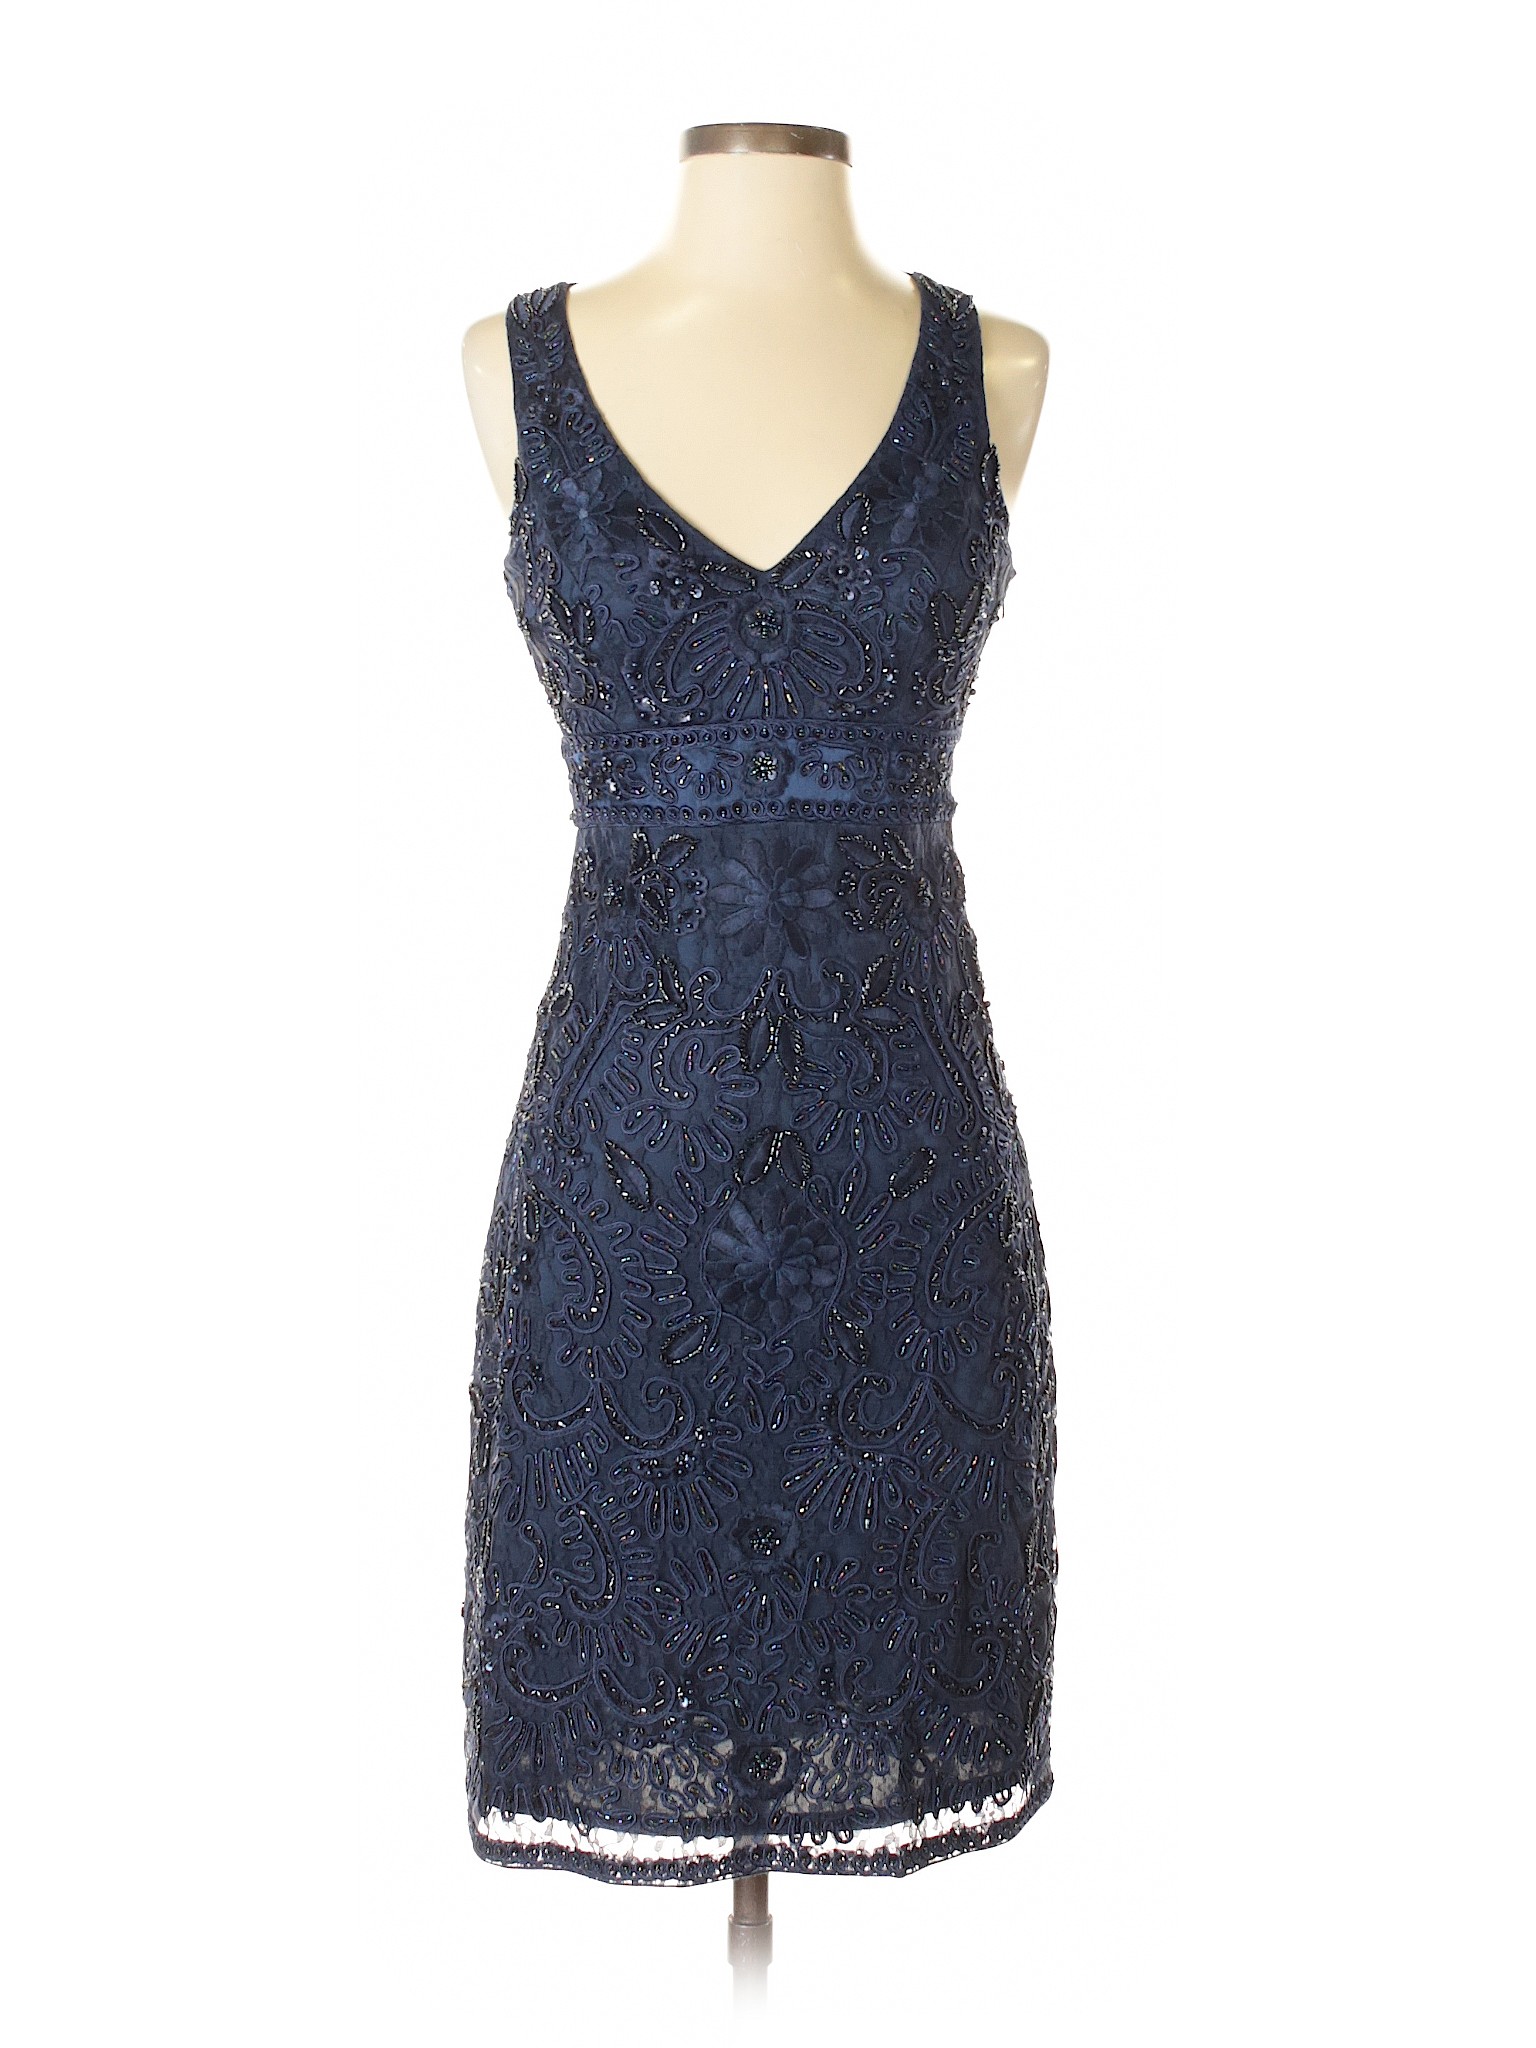 Sue Wong 100% Nylon Lace Dark Blue Cocktail Dress Size 0 - 80% off ...